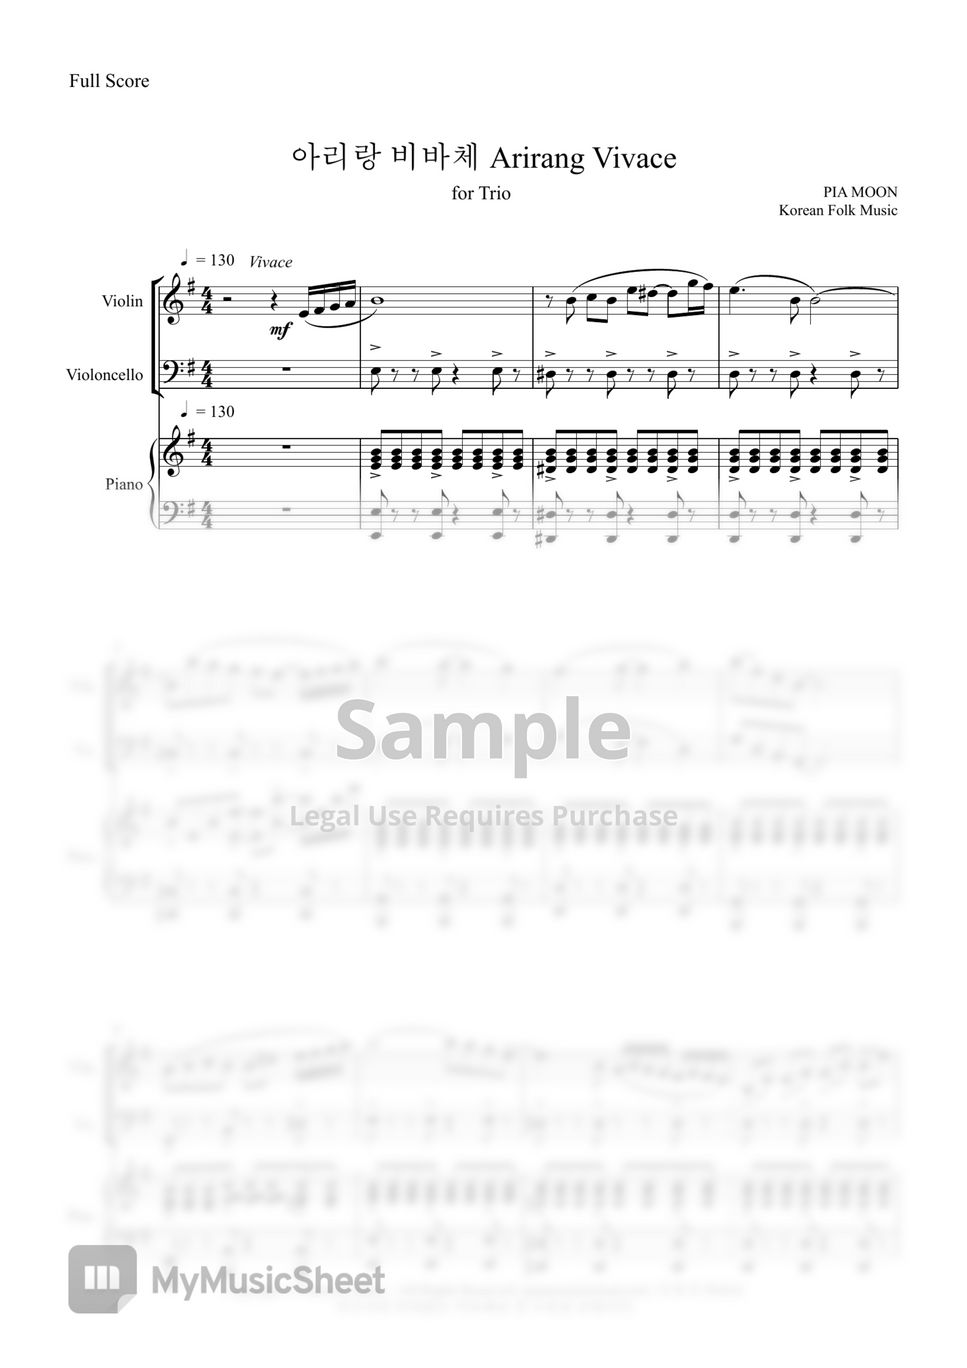 Korean Folk Music - Arirang Vivace (Piano Trio) by PIA MOON